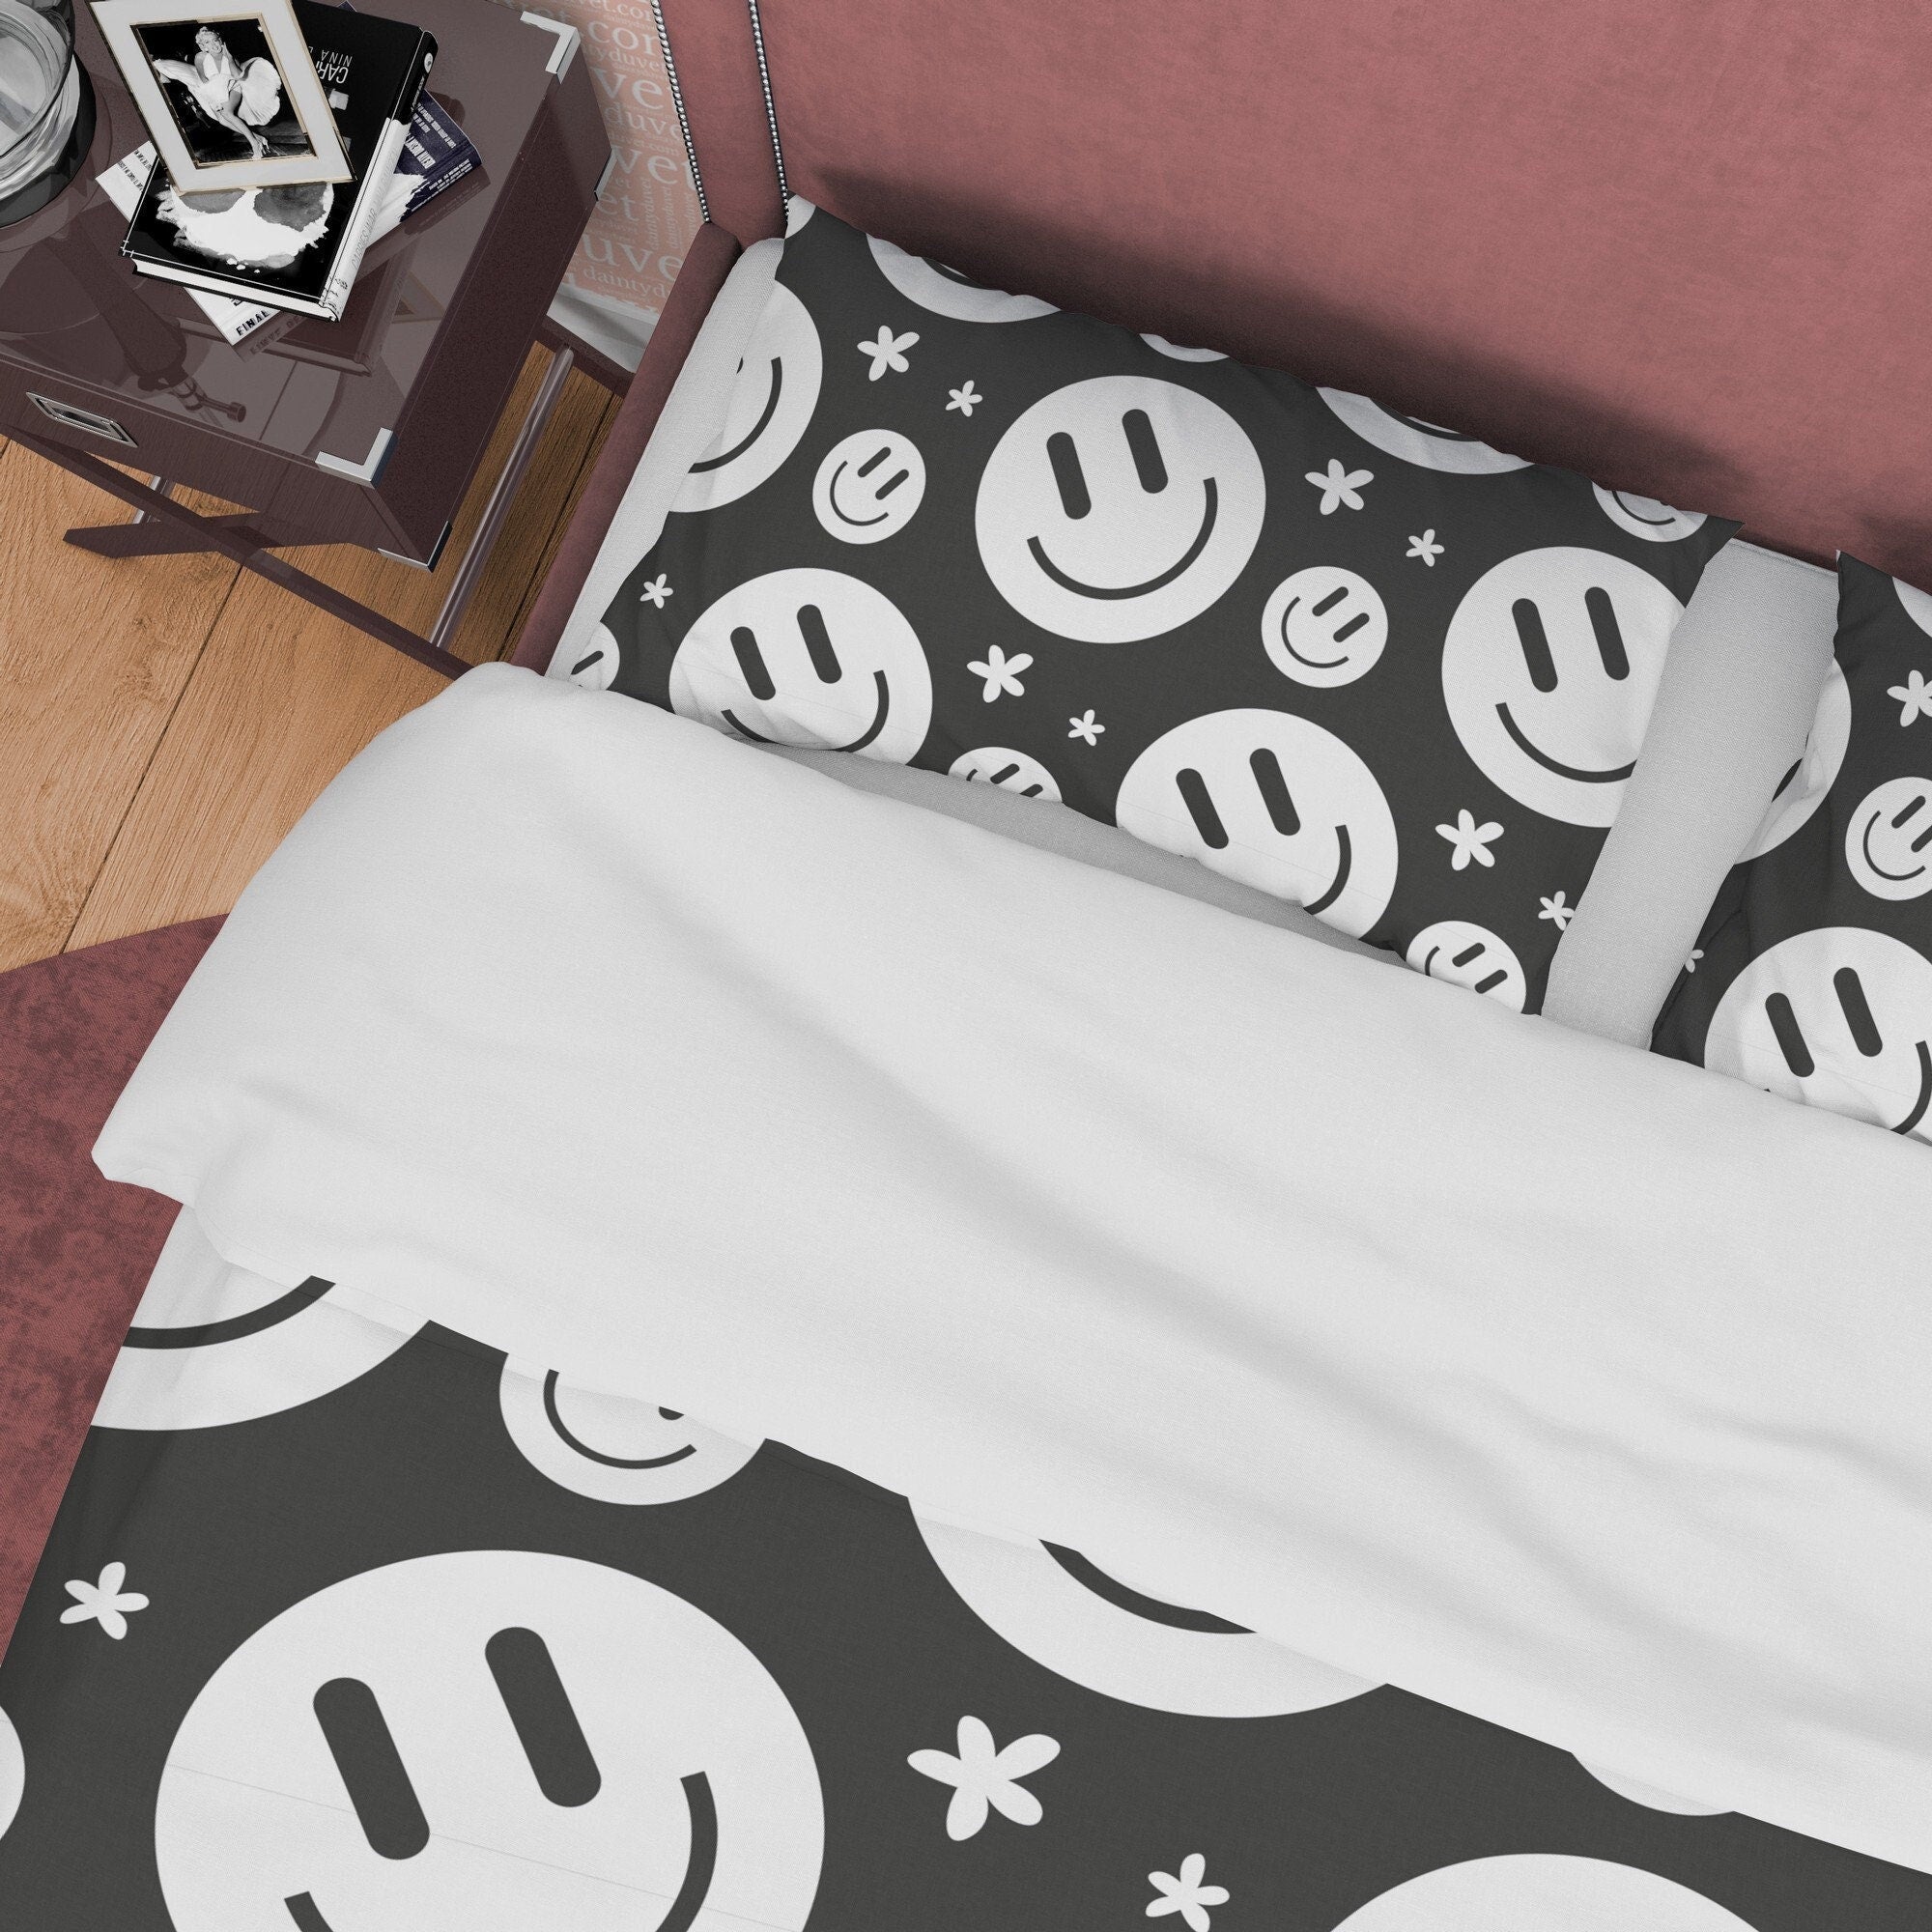 Happy Face Black and White Duvet Cover Set, Smile Emoji Blanket Cover Retro Printed Bedding Set, 90s Nostalgia Quilt Cover, Groovy Bedspread